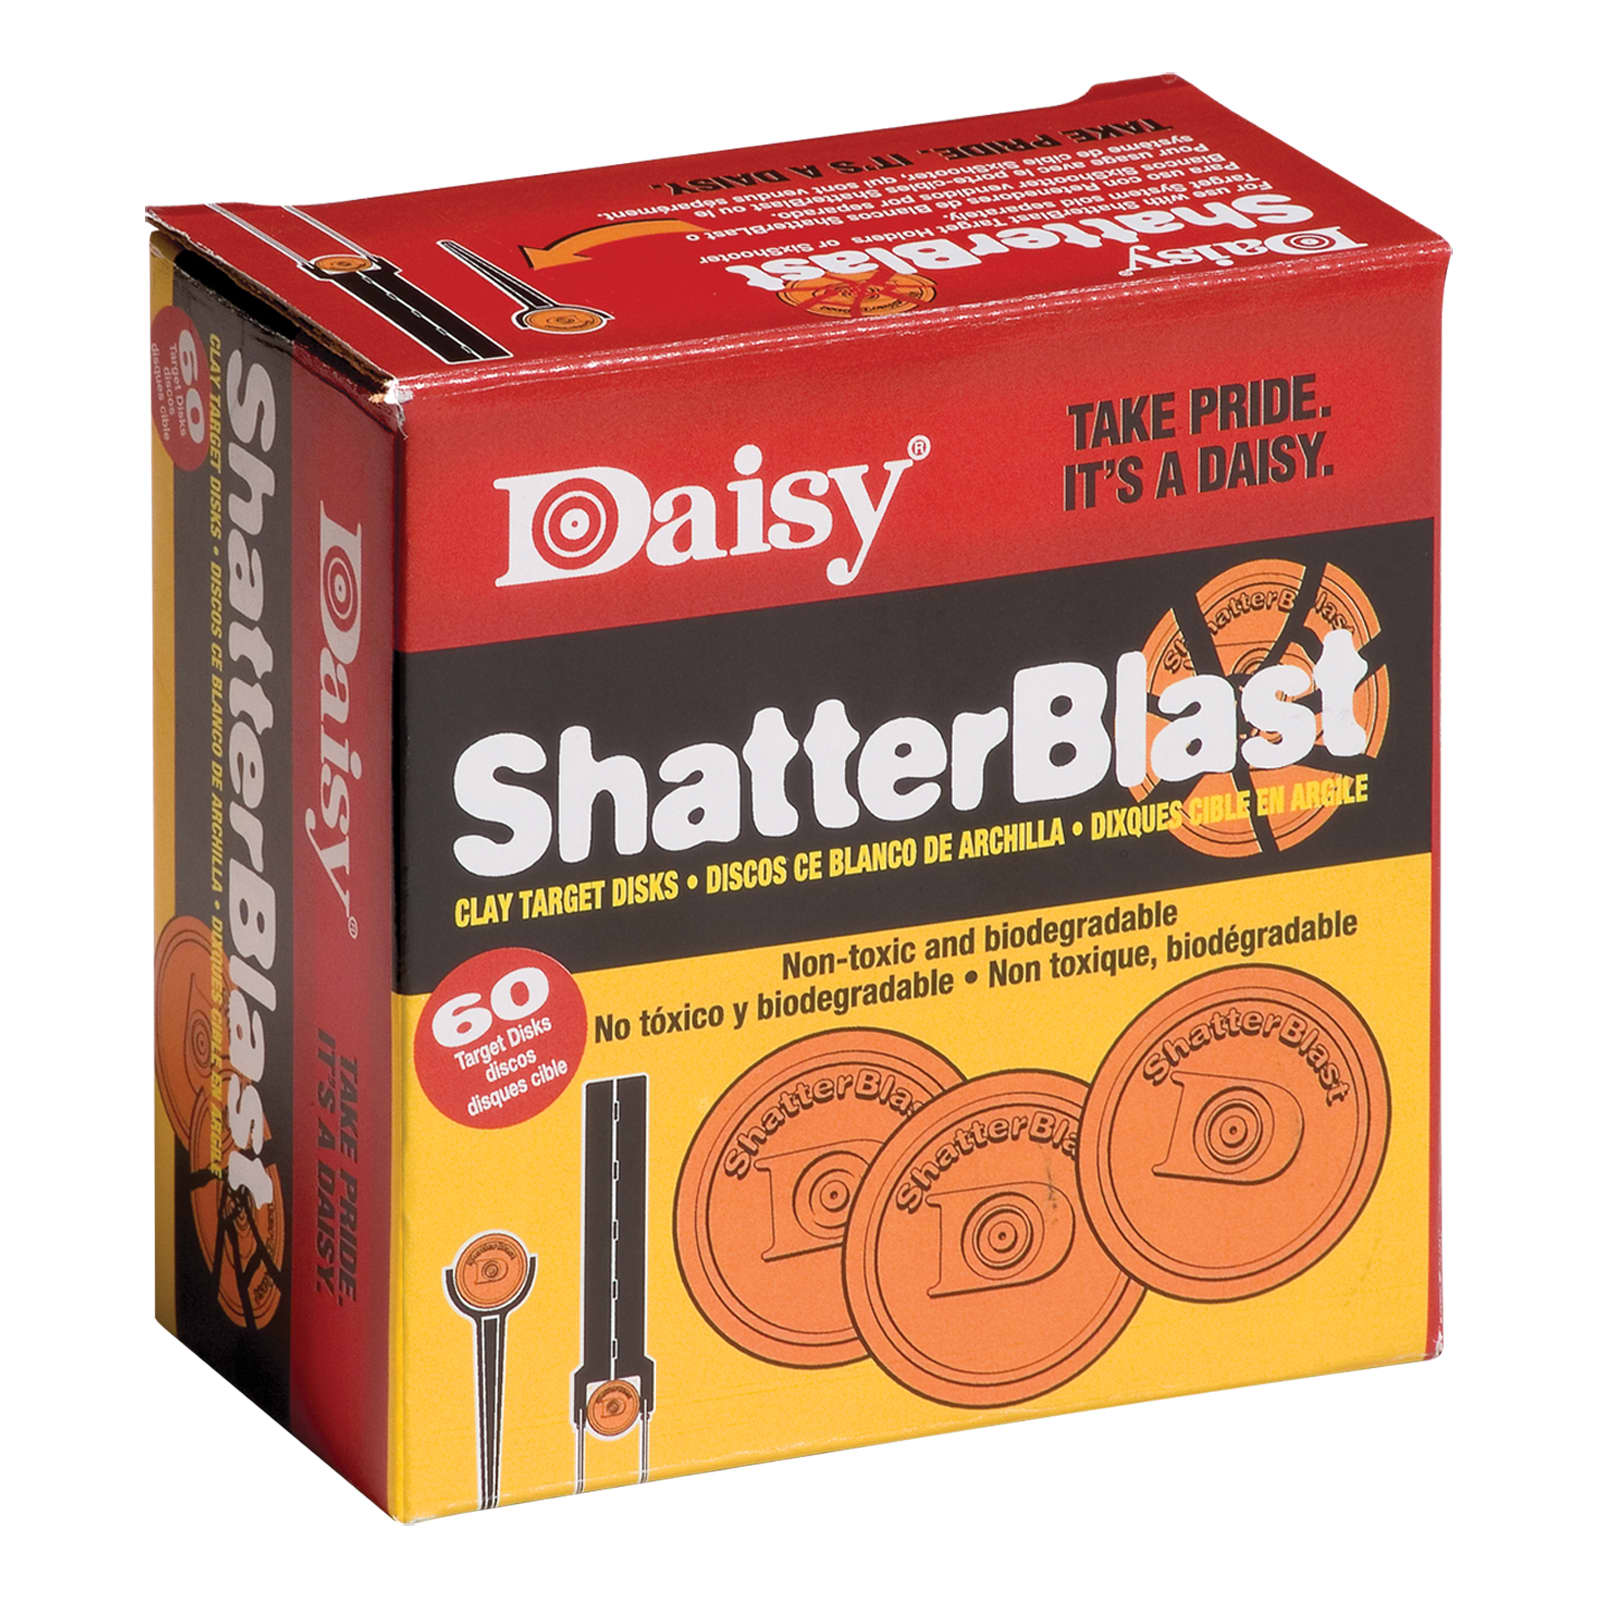 Daisy Shatter Blast Clay Targets